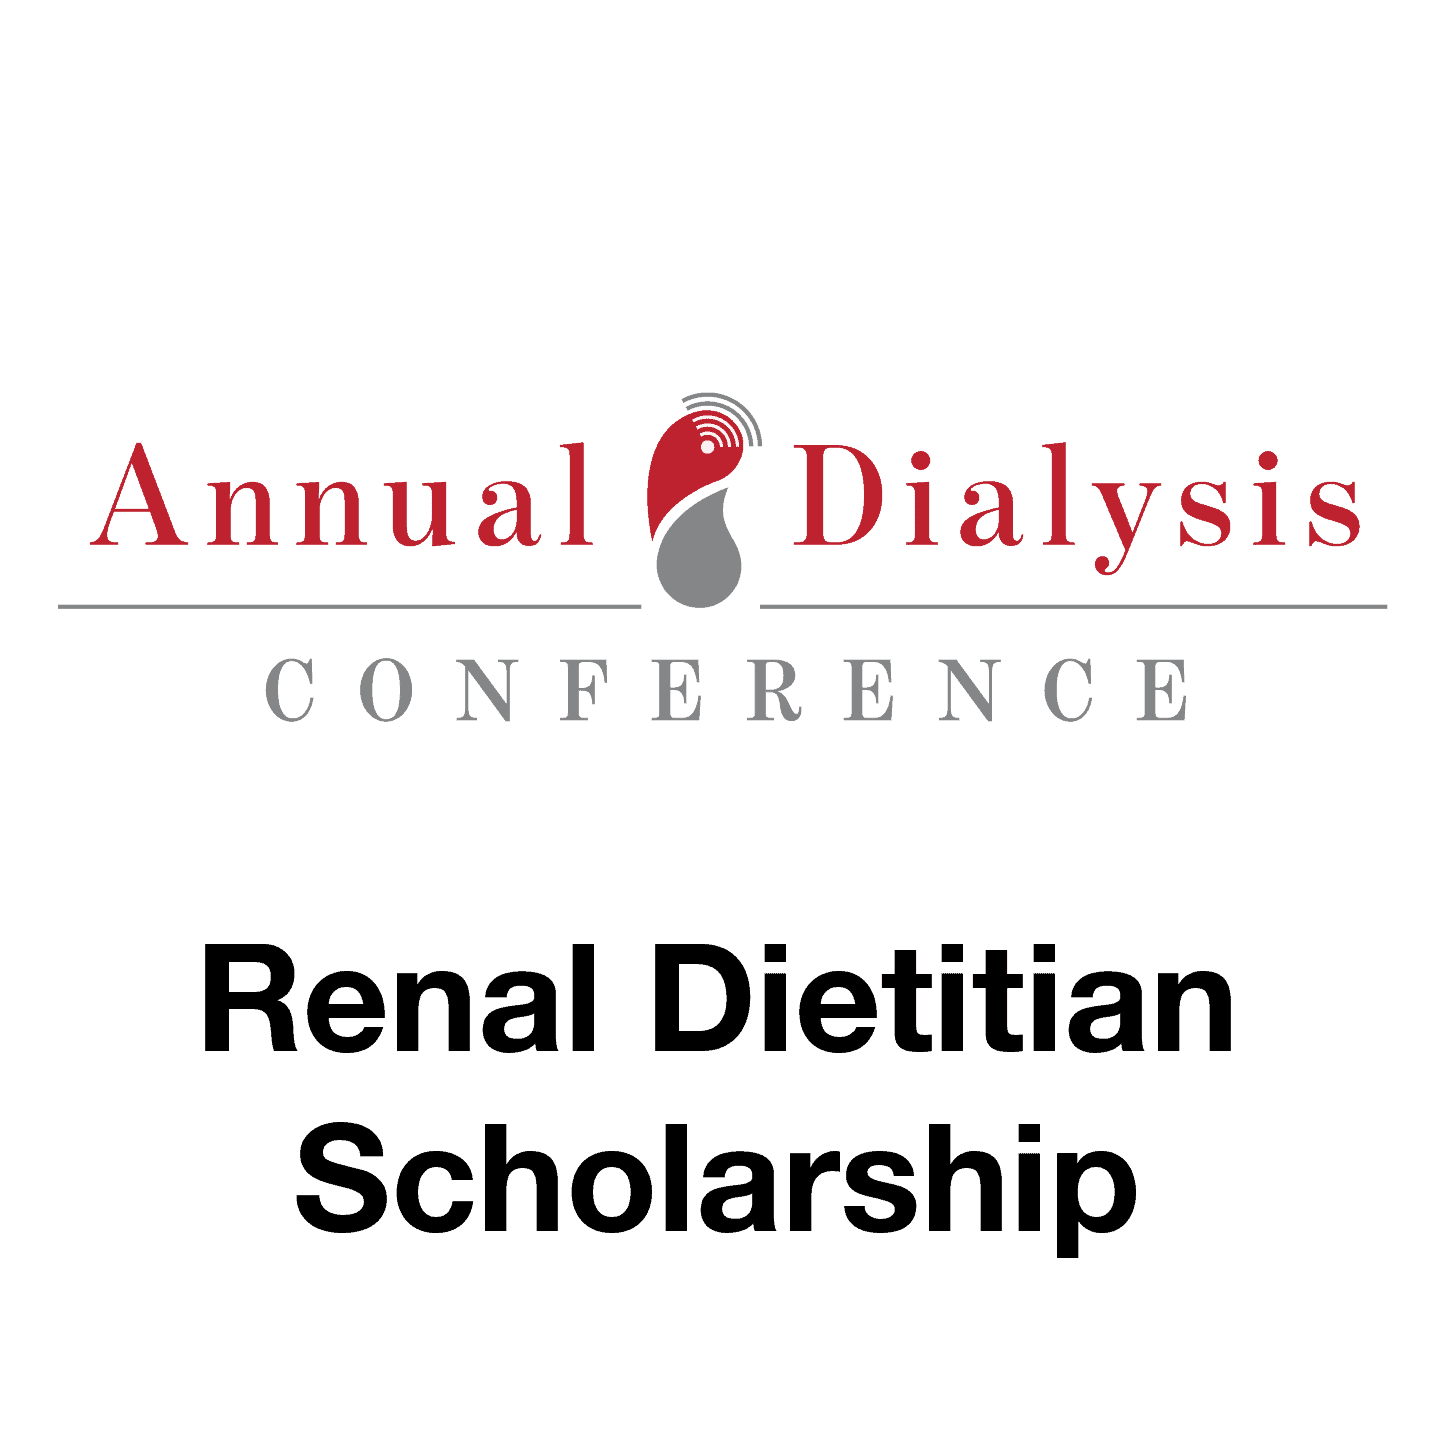 Renal Dietitian Scholarship Form